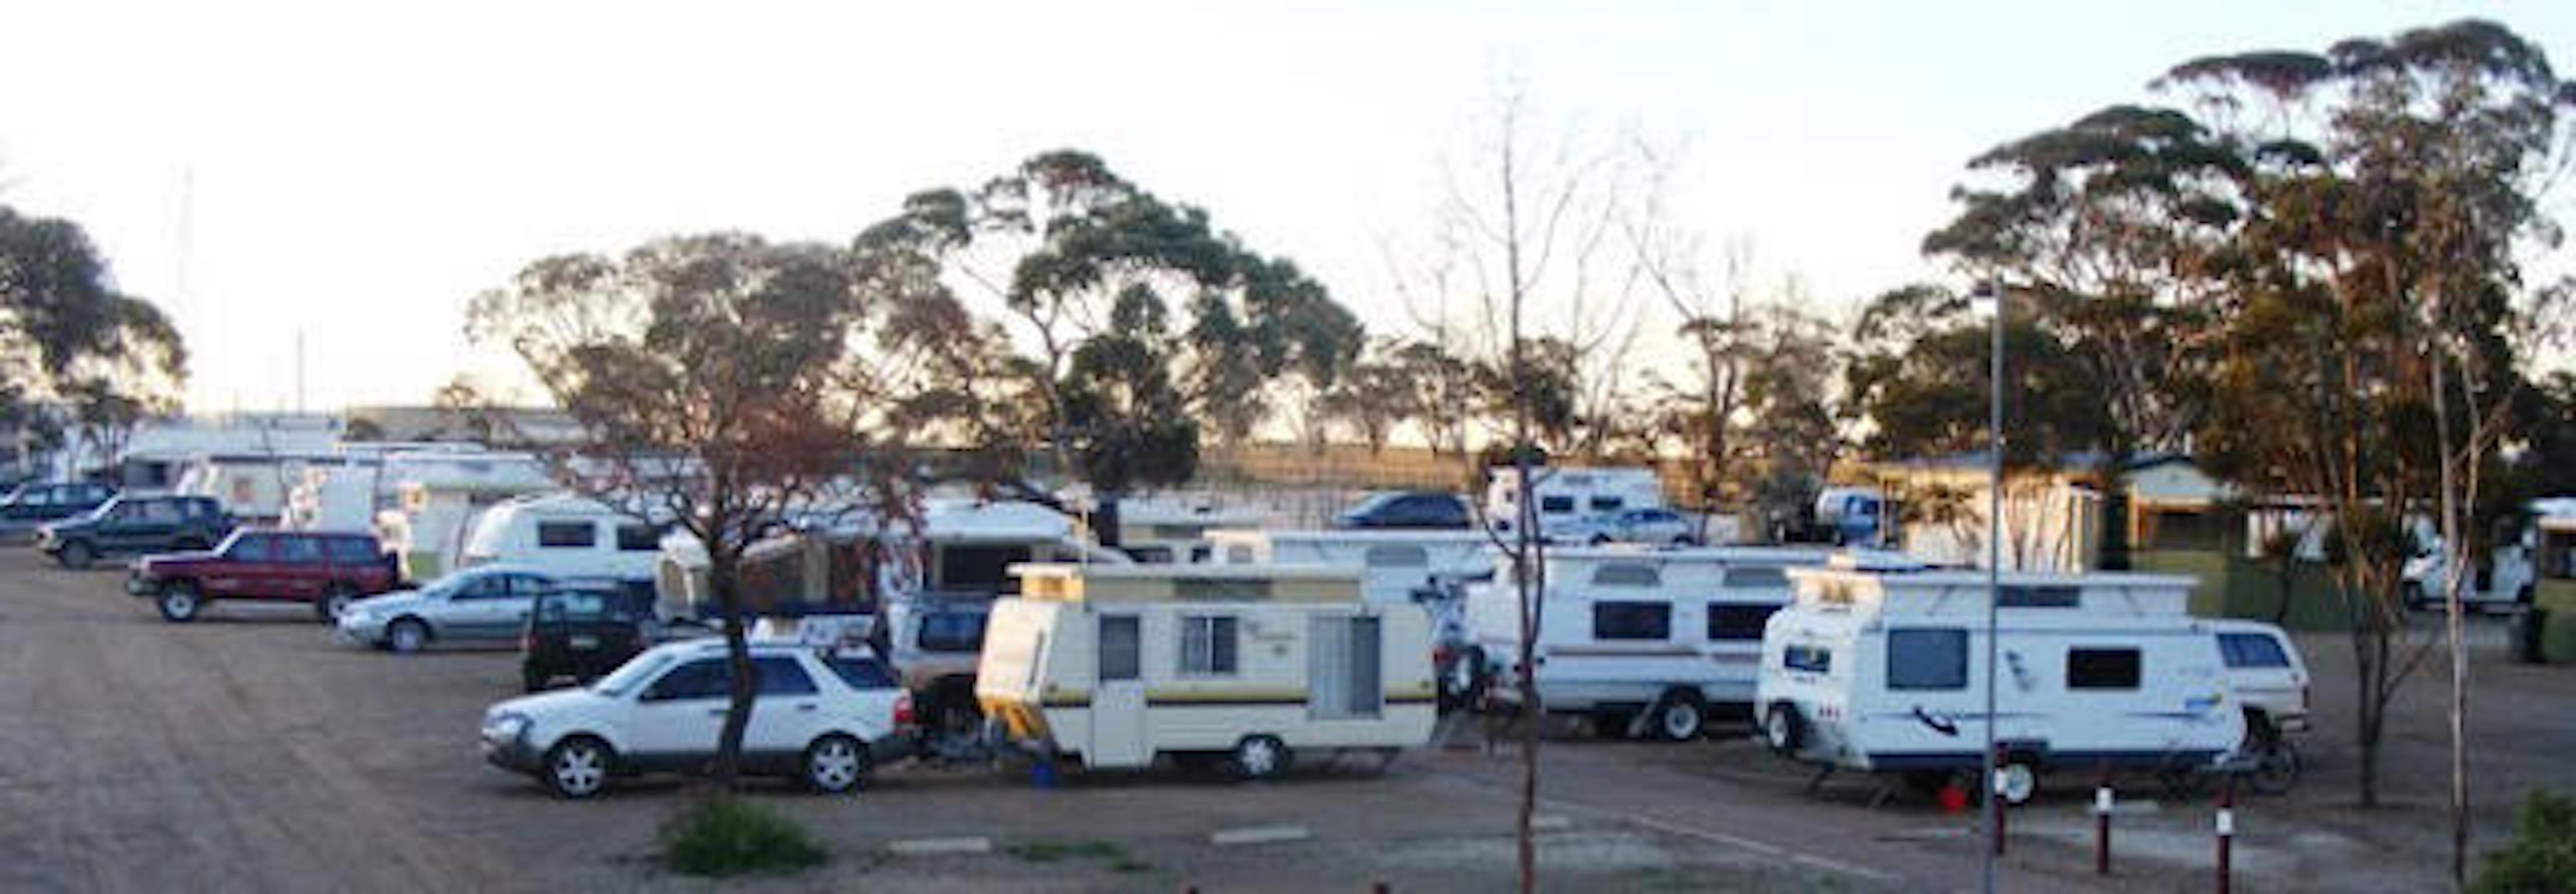 Woomera Traveller's Village and Caravan Park - Perisher Accommodation